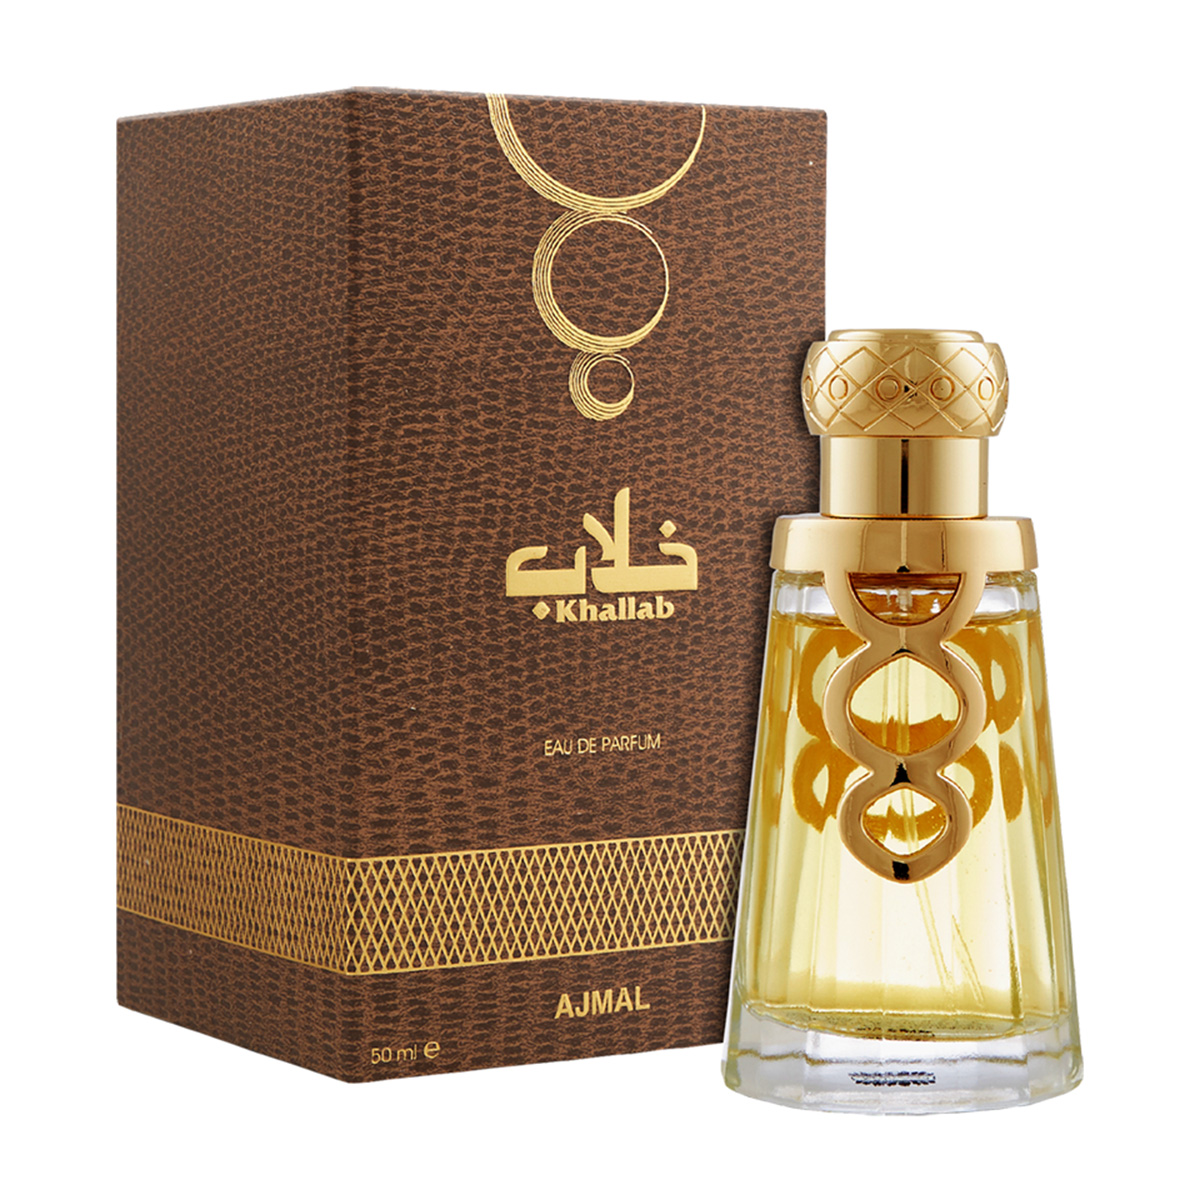 Ajmal Khallab Eau De Parfum, 50ml